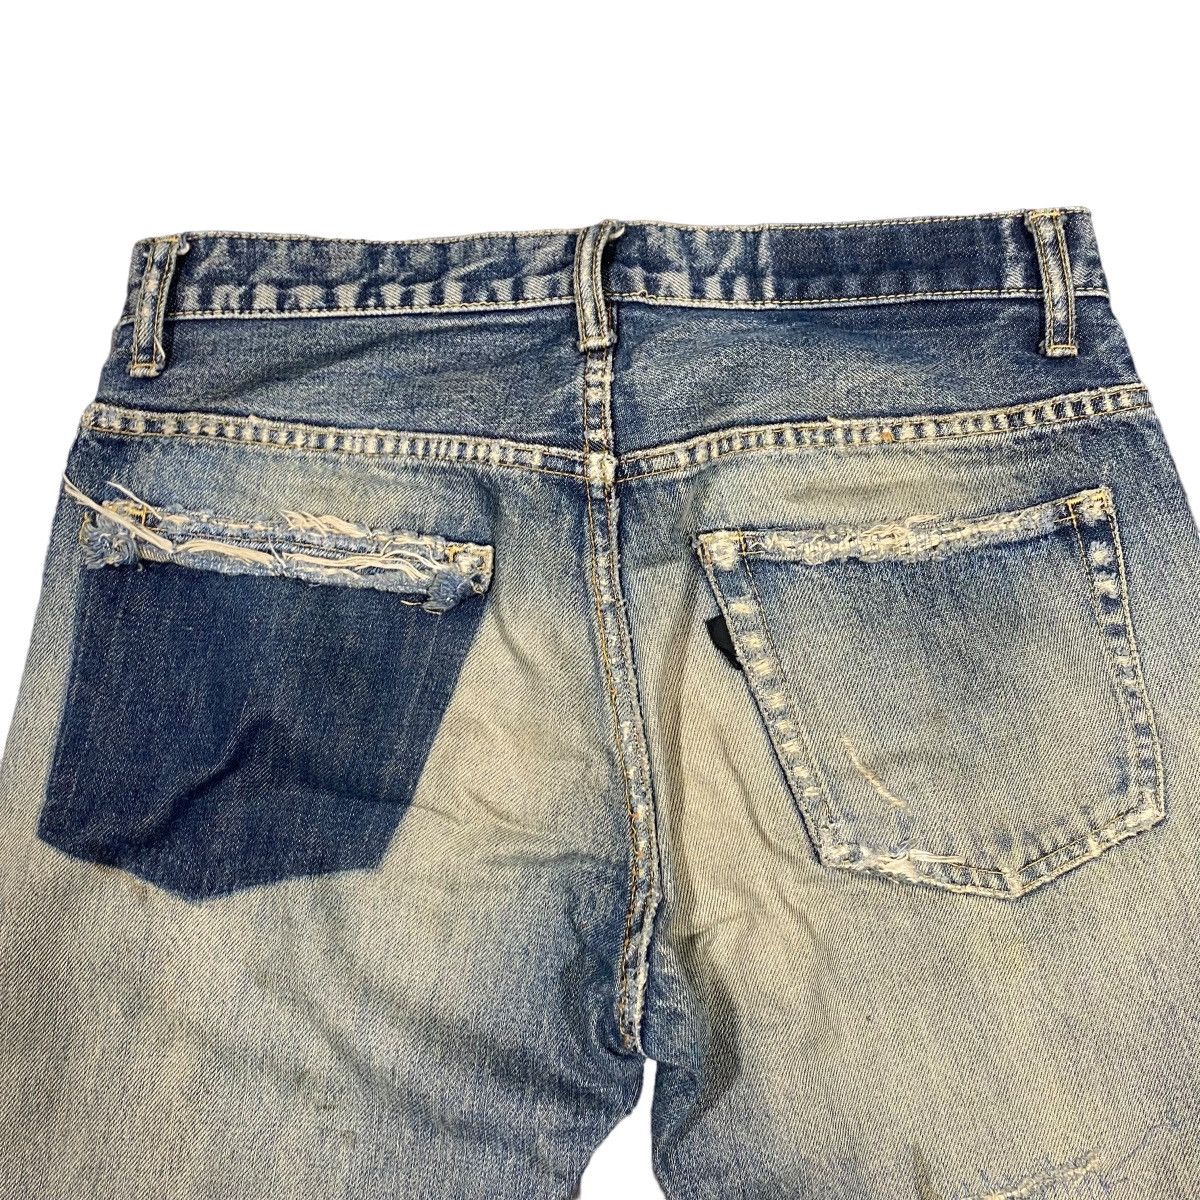 ❗️❗️❗️Rare Item Undercover 68 Blue Yarn Jeans - 19